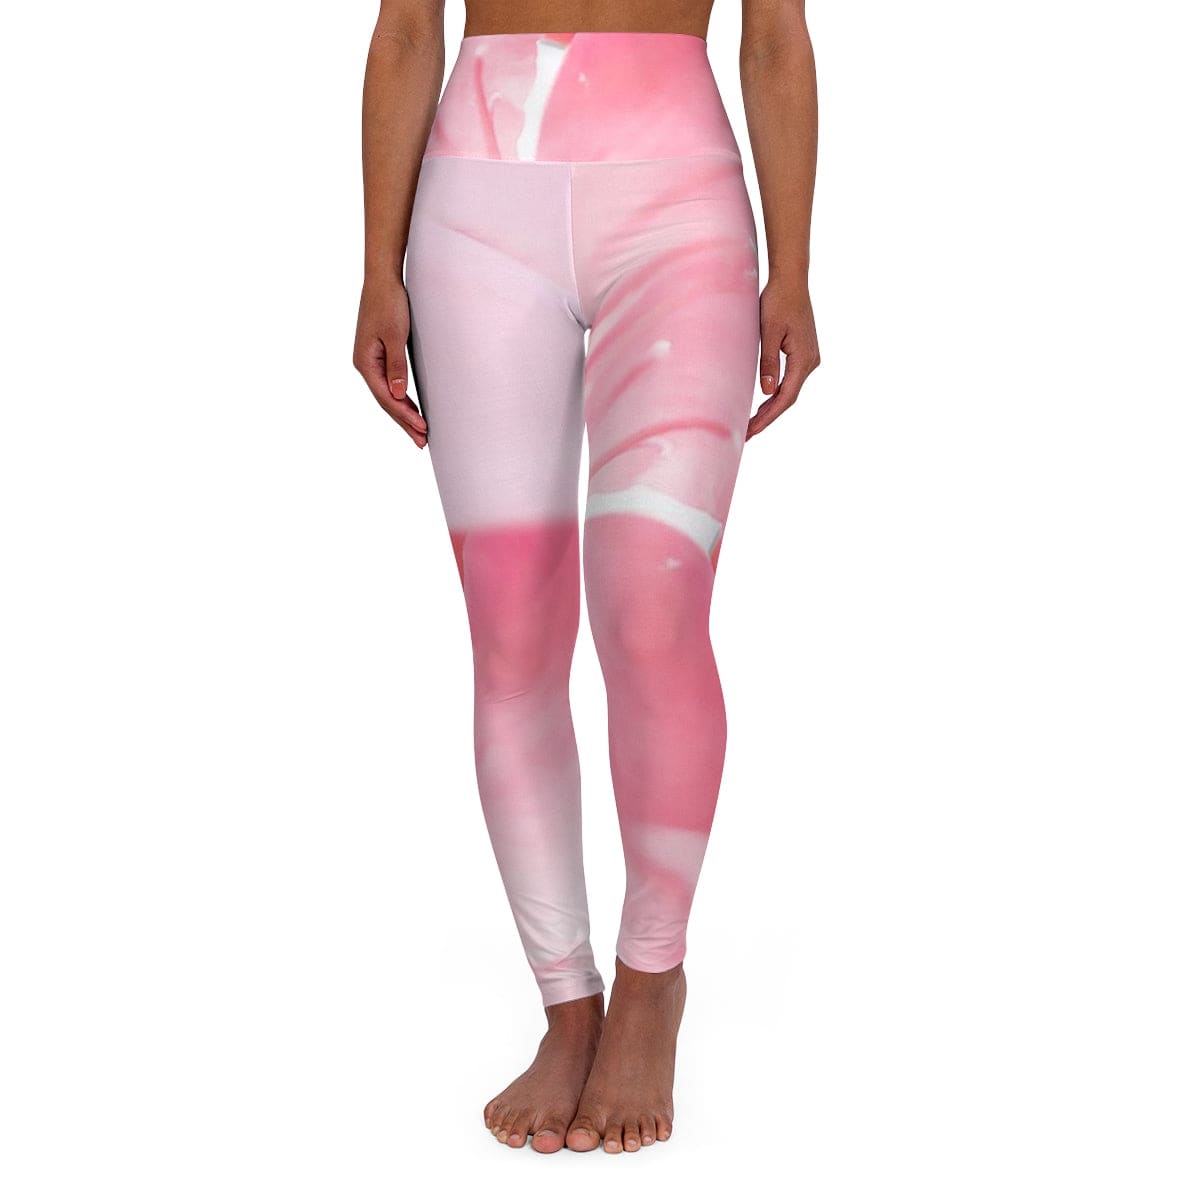 Womens Hhigh - waist Fitness Legging Yoga Pants Pink Flower Bloom - Womens